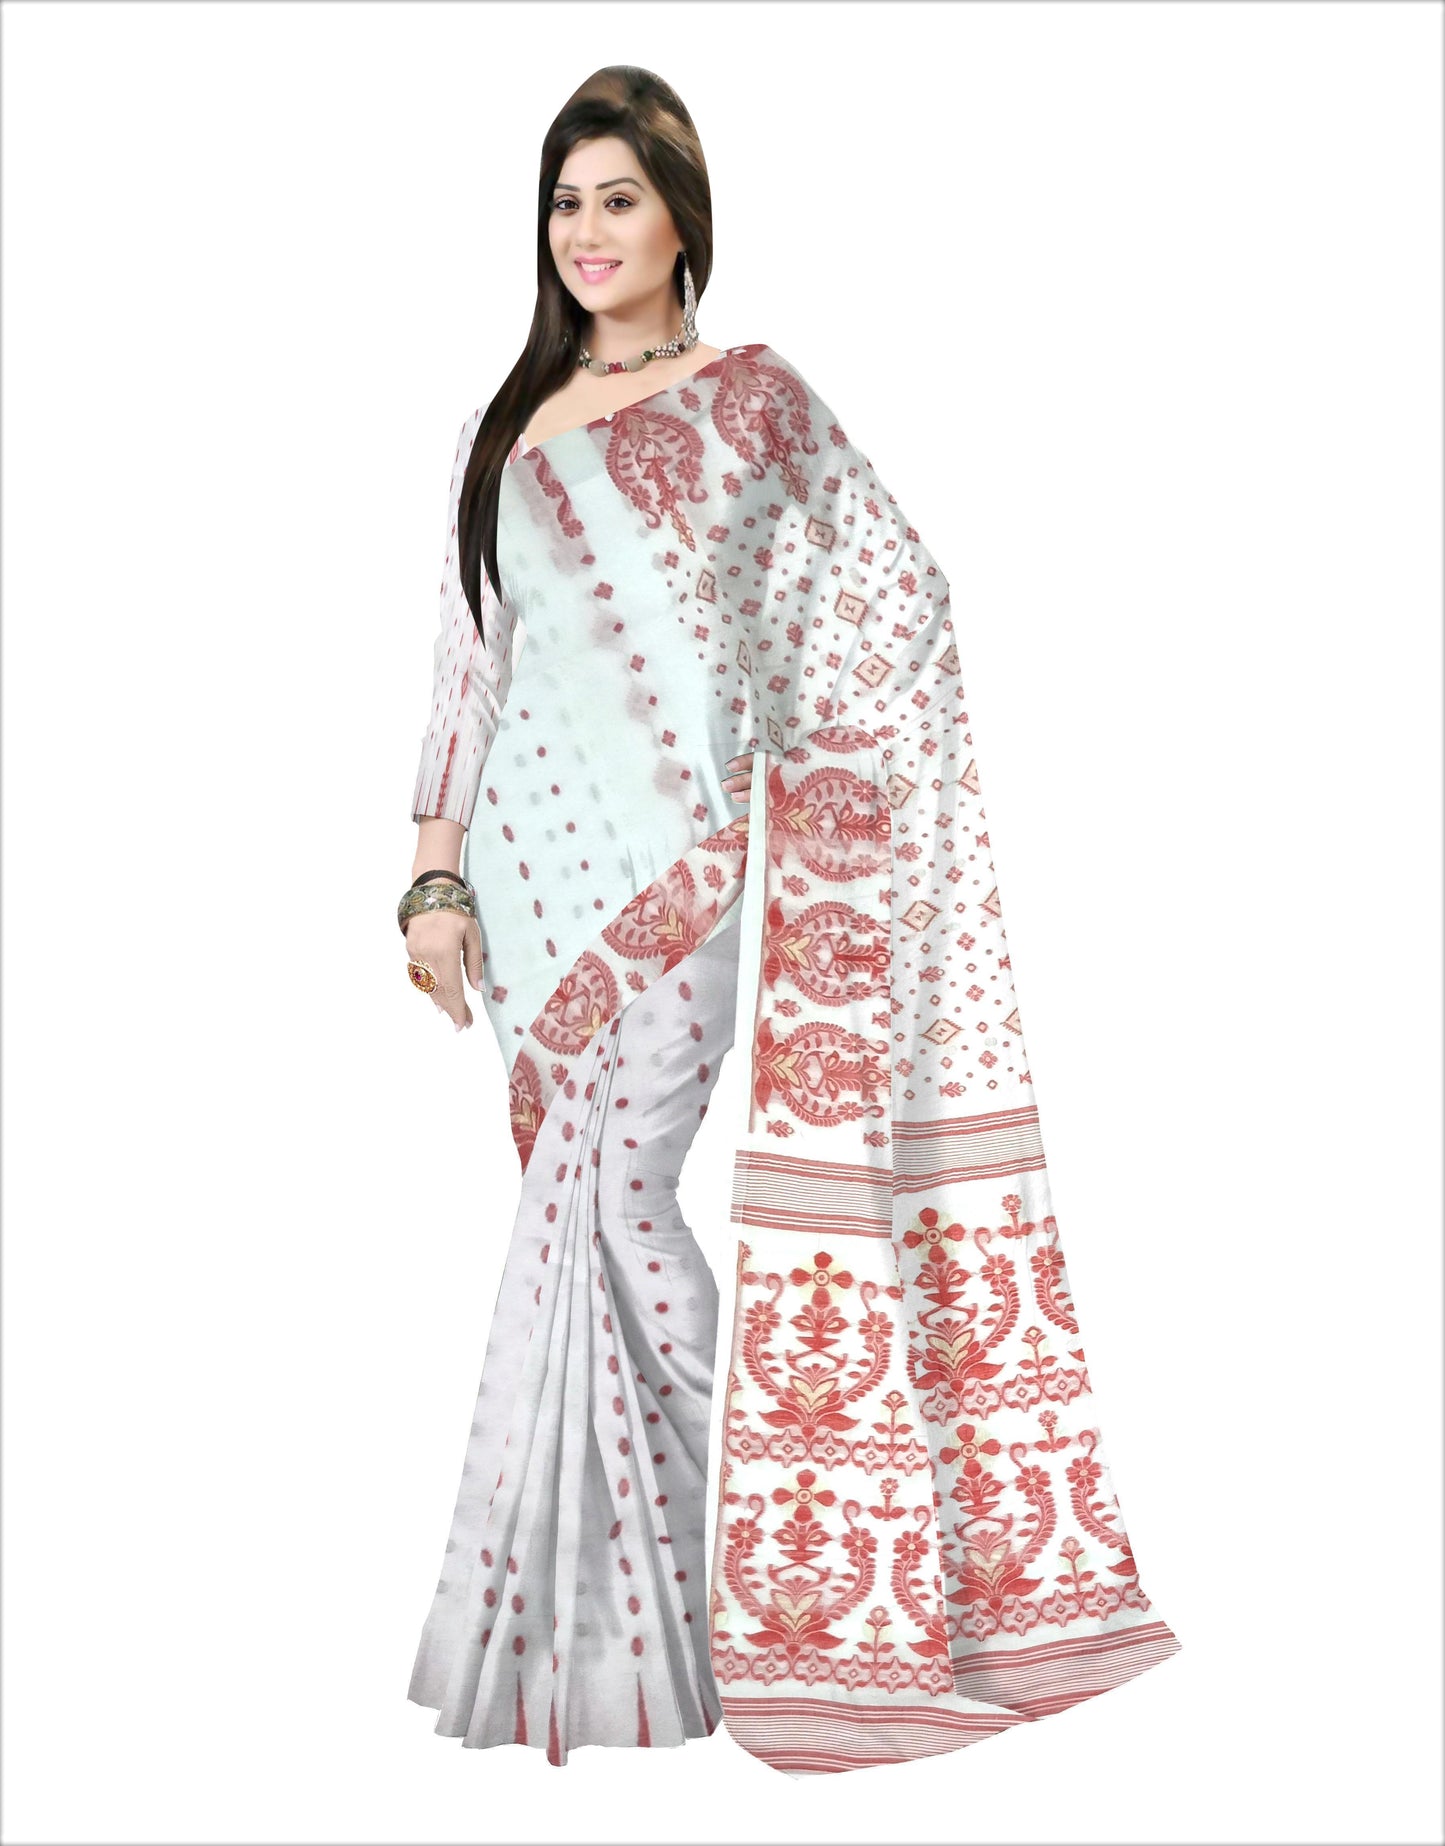 Pradip Fabrics Ethnic Woman's Tant Dhakai Jamdani Tan Color Saree